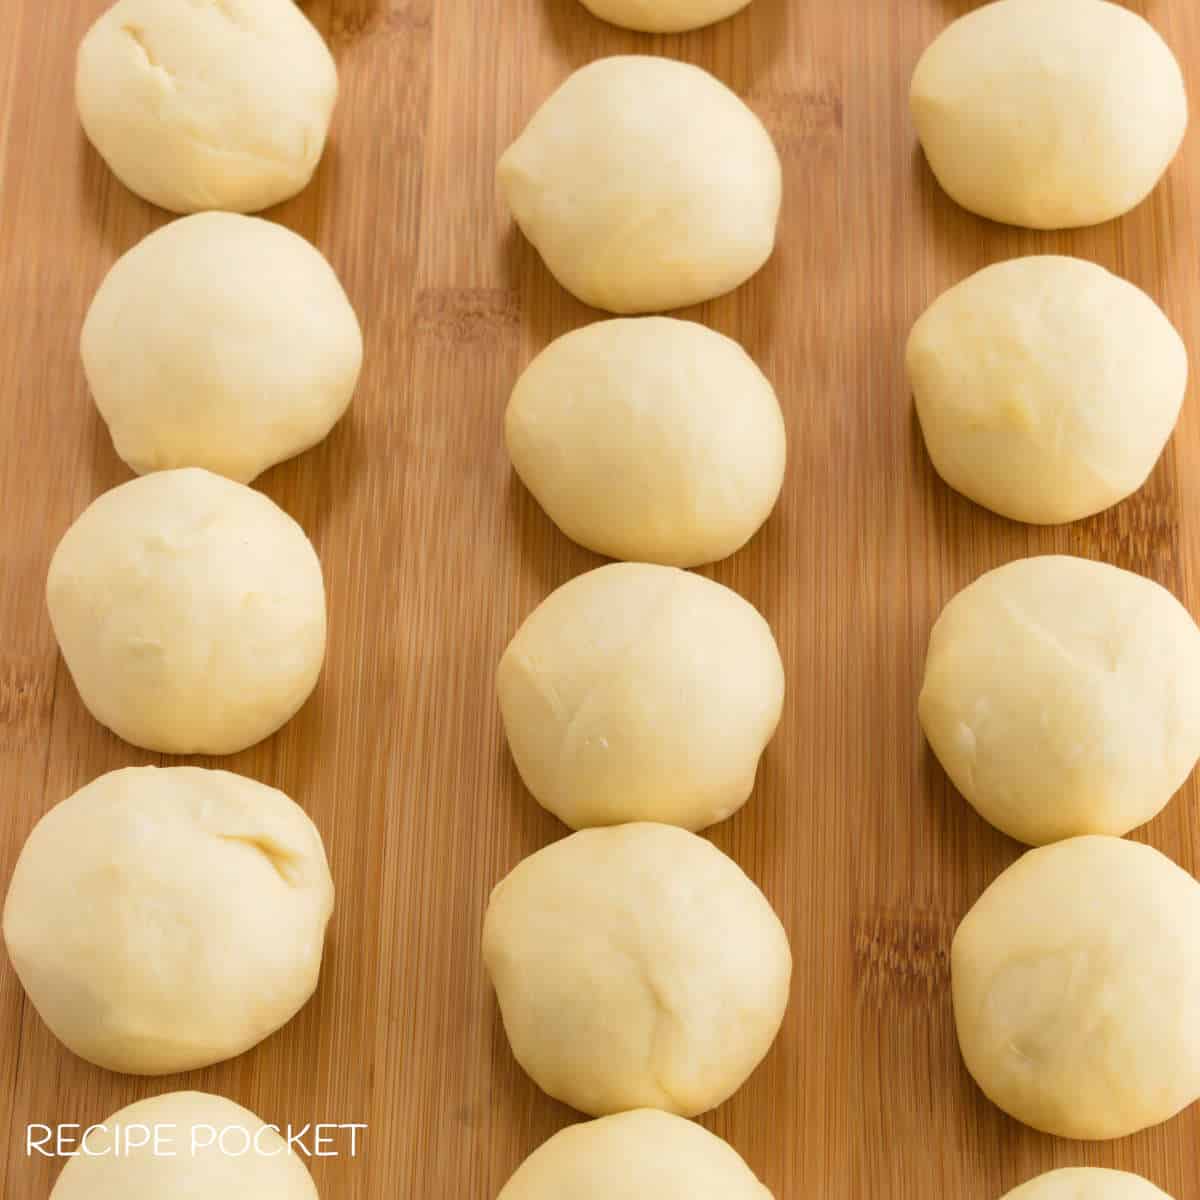 Dough balls on a board.